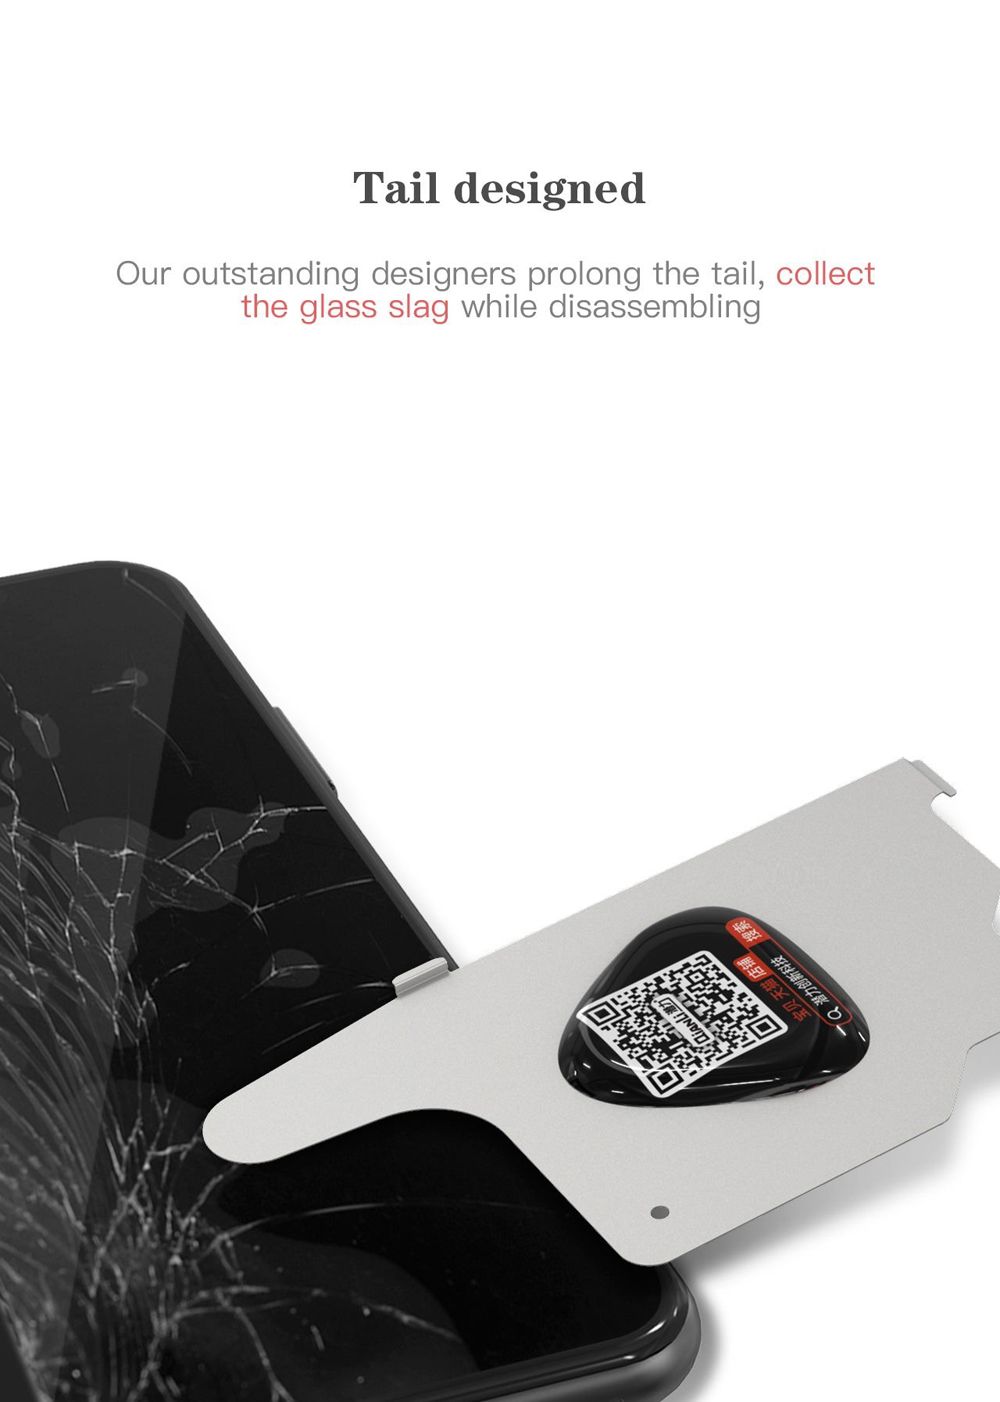 5Pcs-Qianli-Tool-3D-Dismantling-Card-Ultra-Thin-Phone-Pry-Spudger-LCD-Screen-Opener-for-iPhone-Samsu-1576022